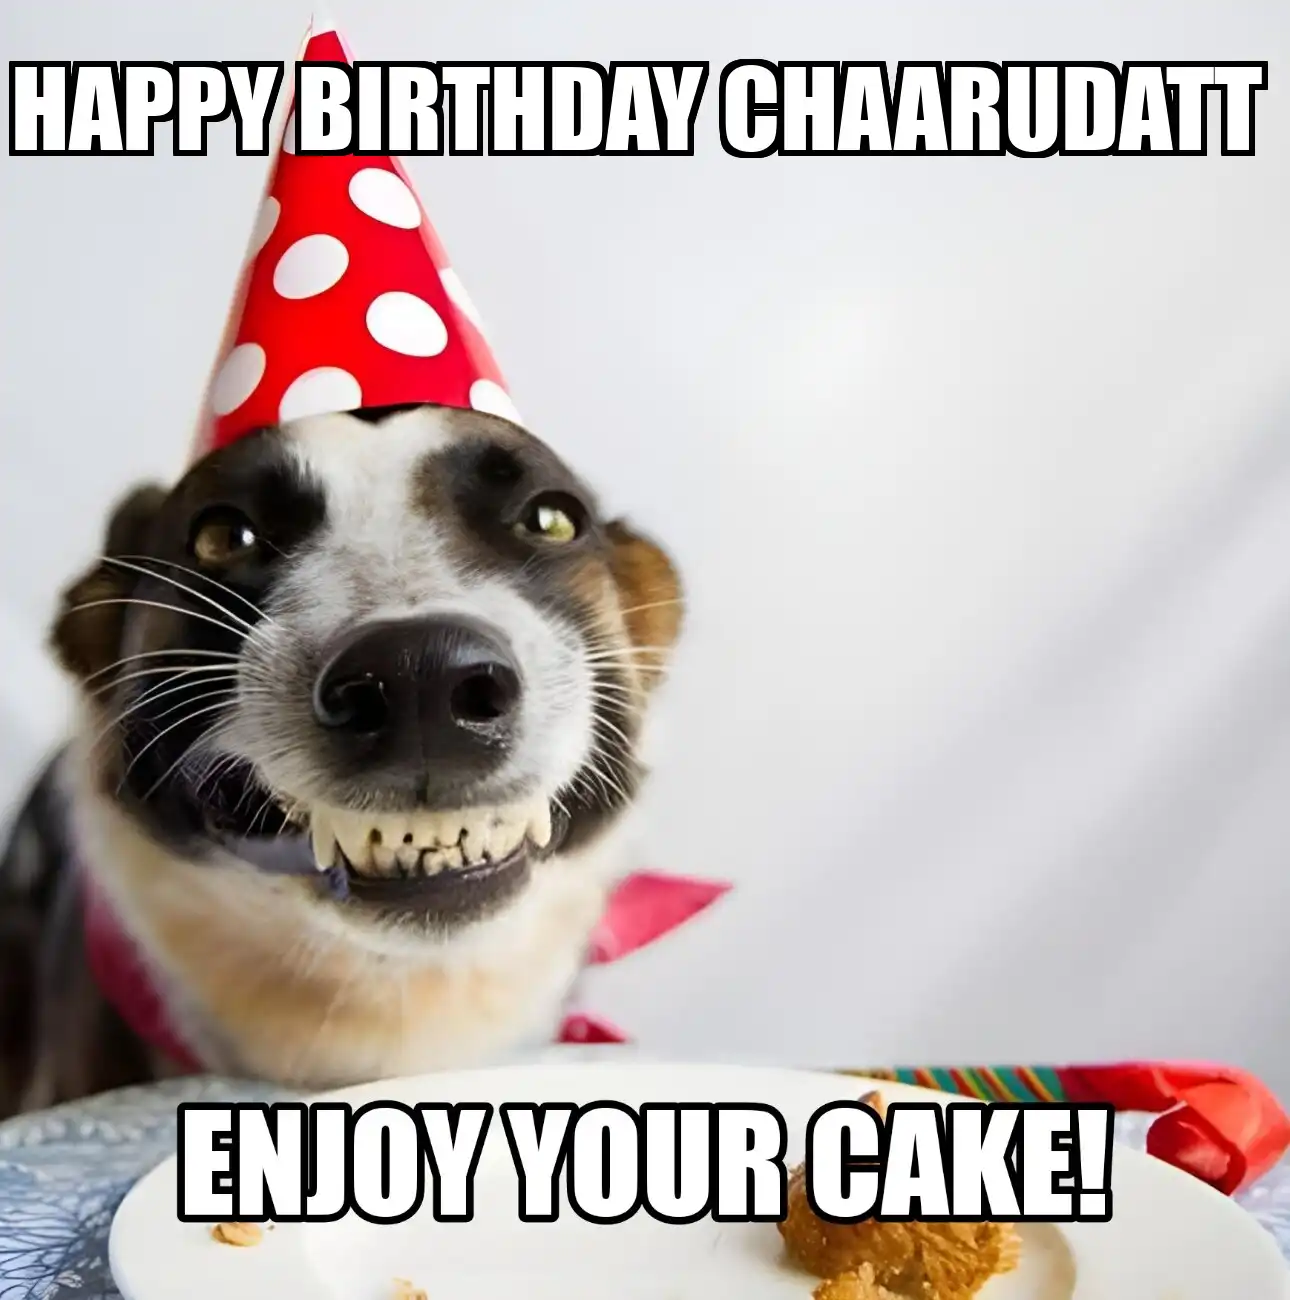 Happy Birthday Chaarudatt Enjoy Your Cake Dog Meme